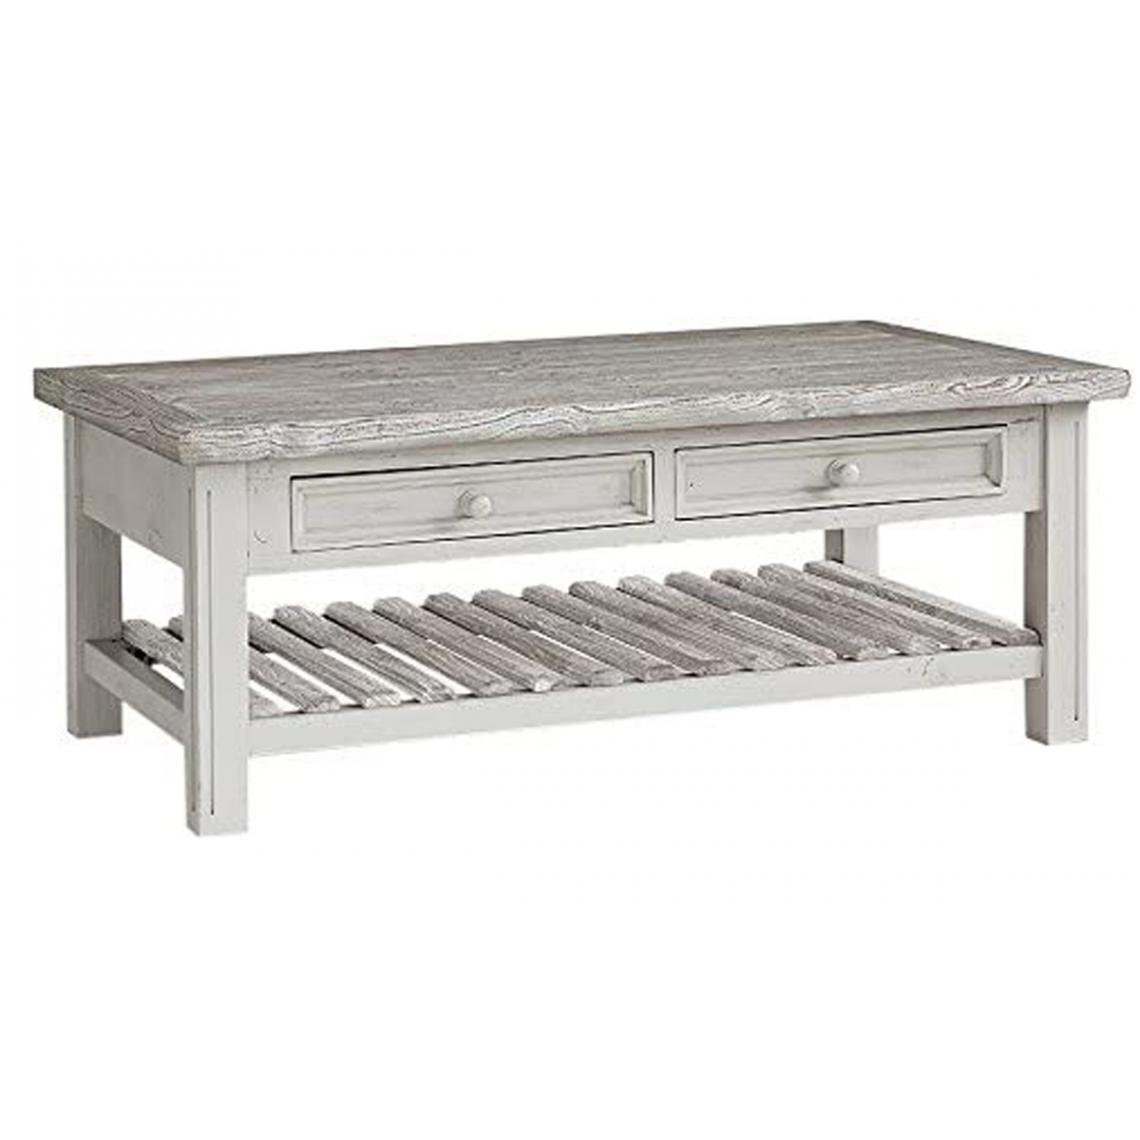 Pegane - Table basse en pin coloris blanc - L.140 x H.55 x P.80 cm - Tables basses